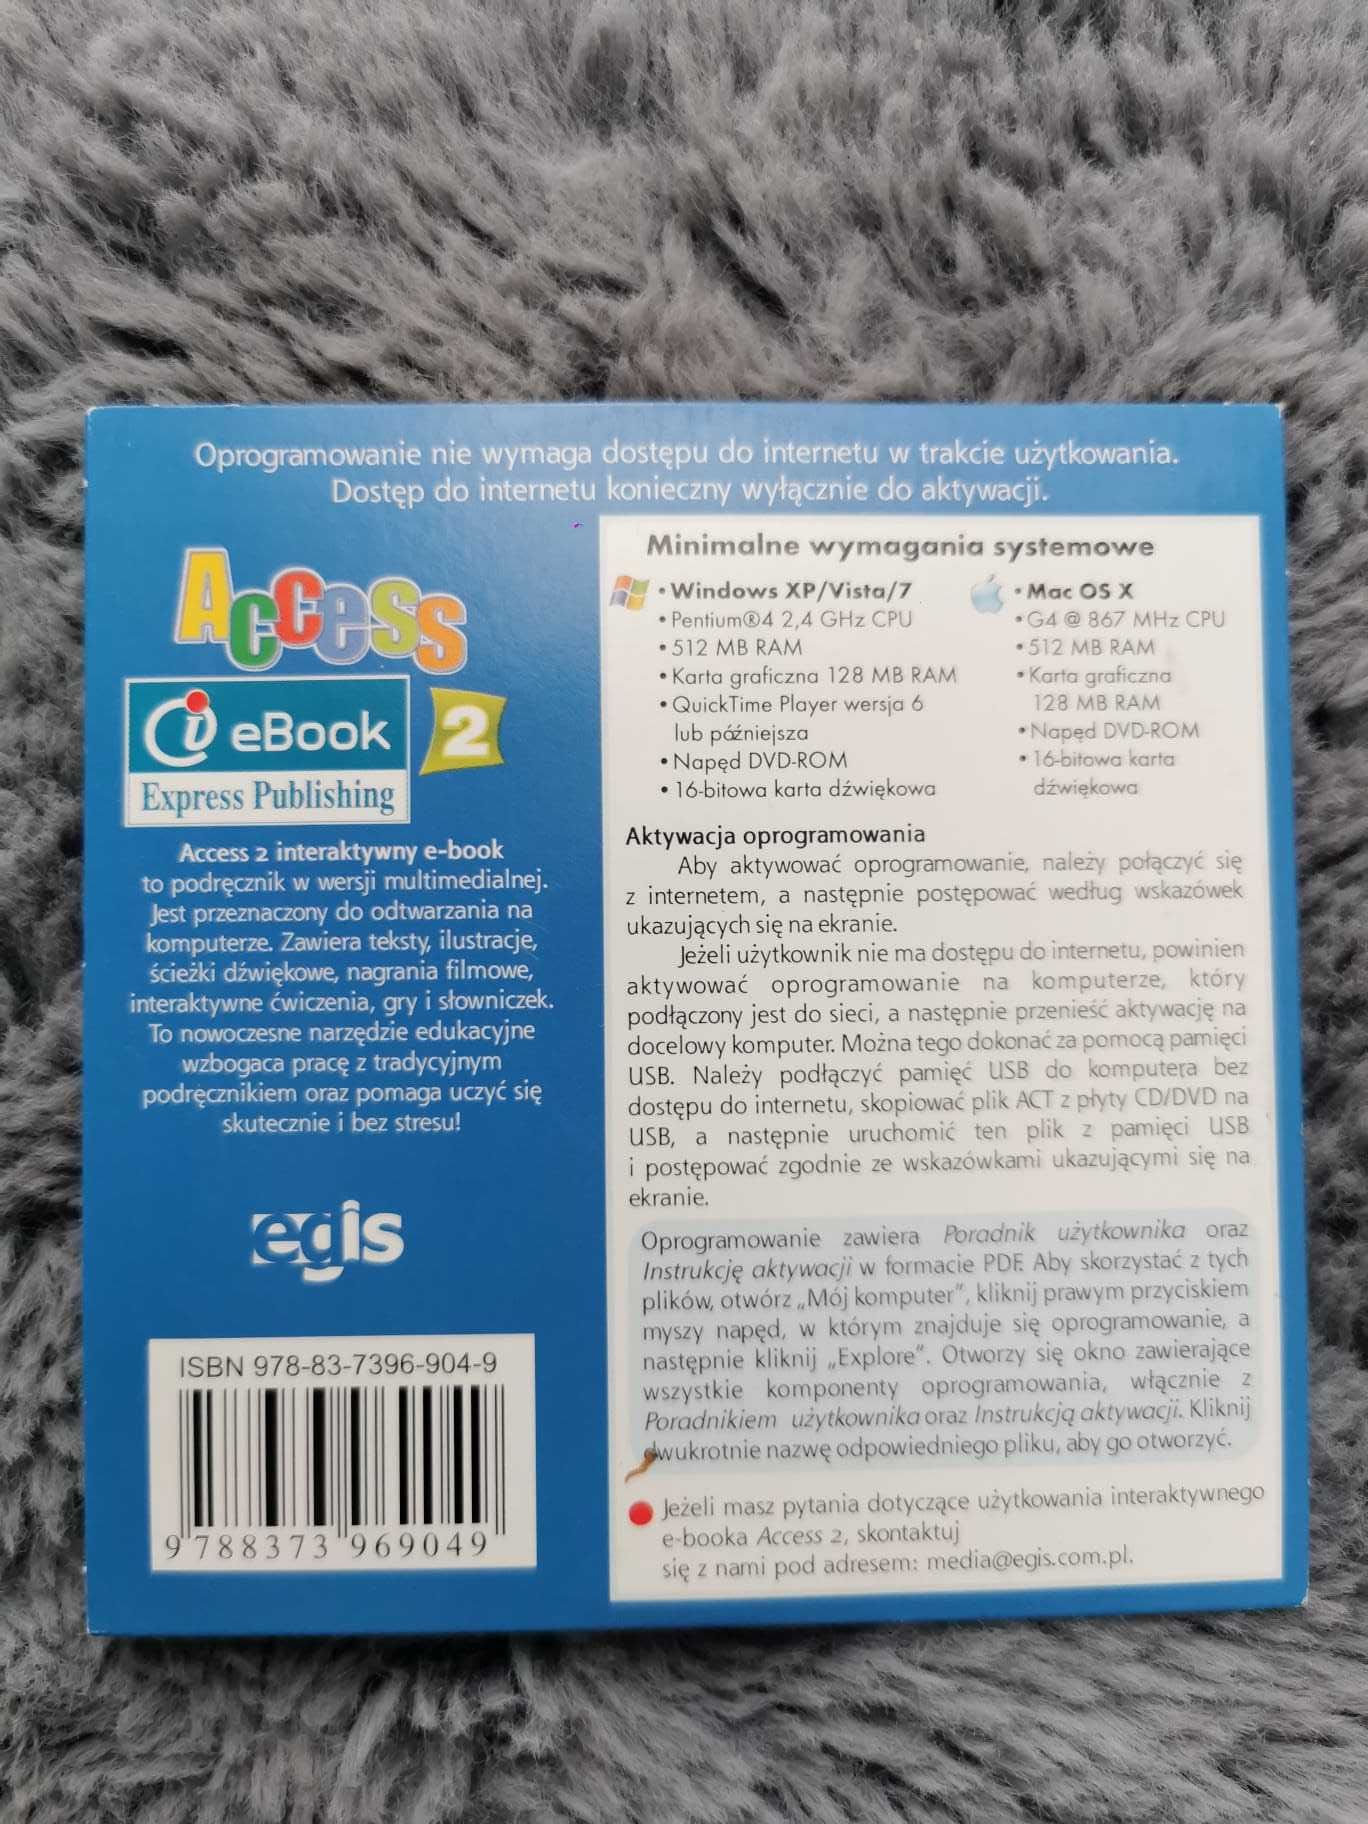 interaktywny ibook podręcznik Access 2, express publishing